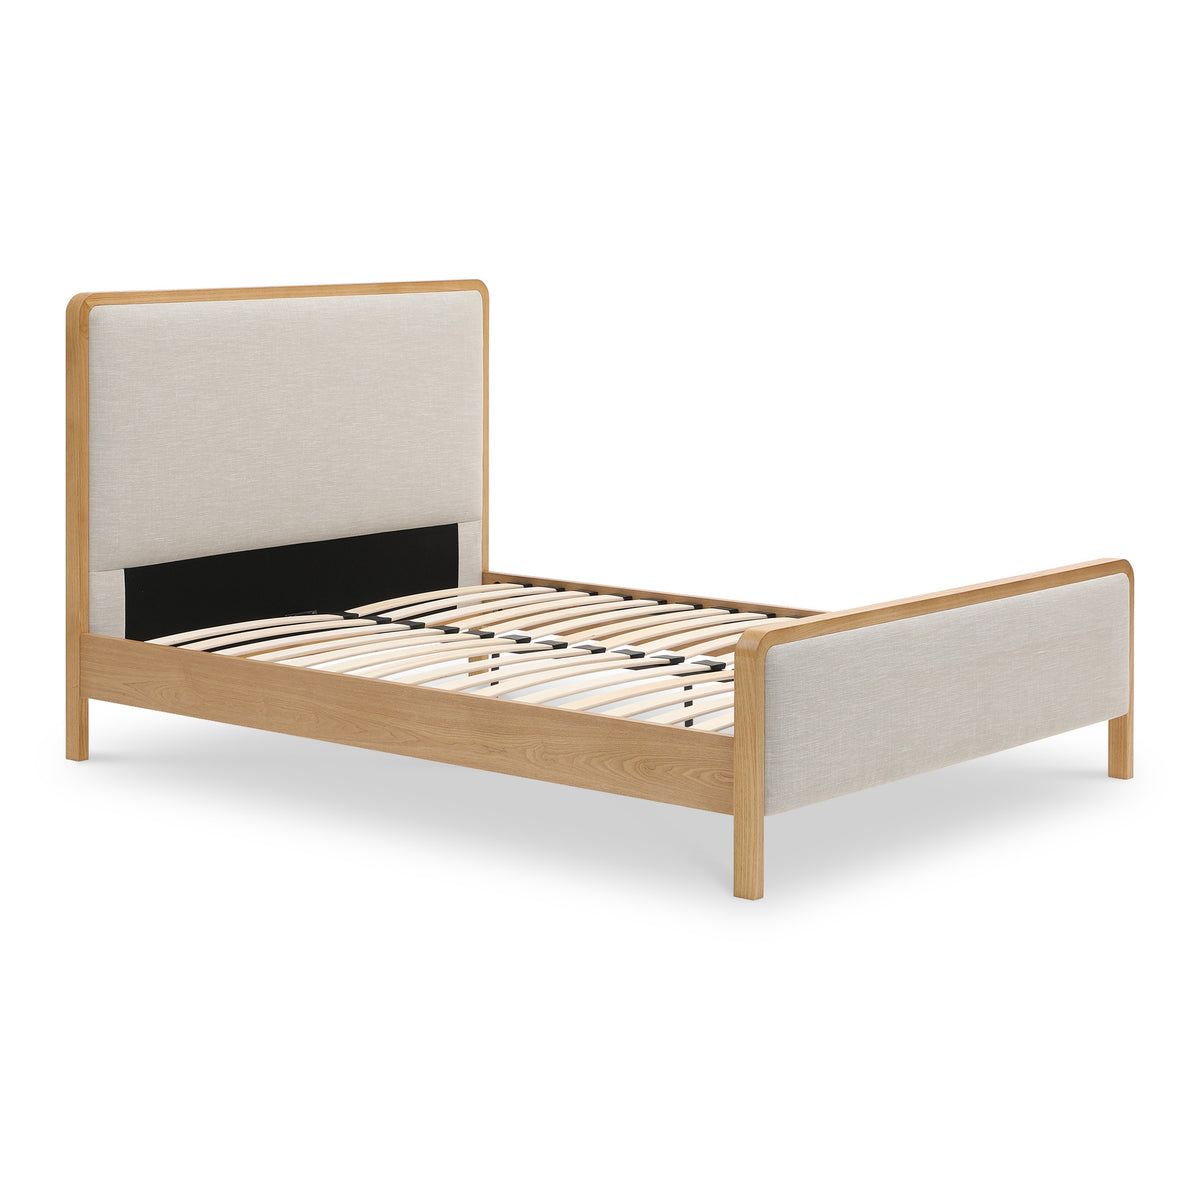 Austin Upholstered Wooden Bed Frame from Roseland Furniture